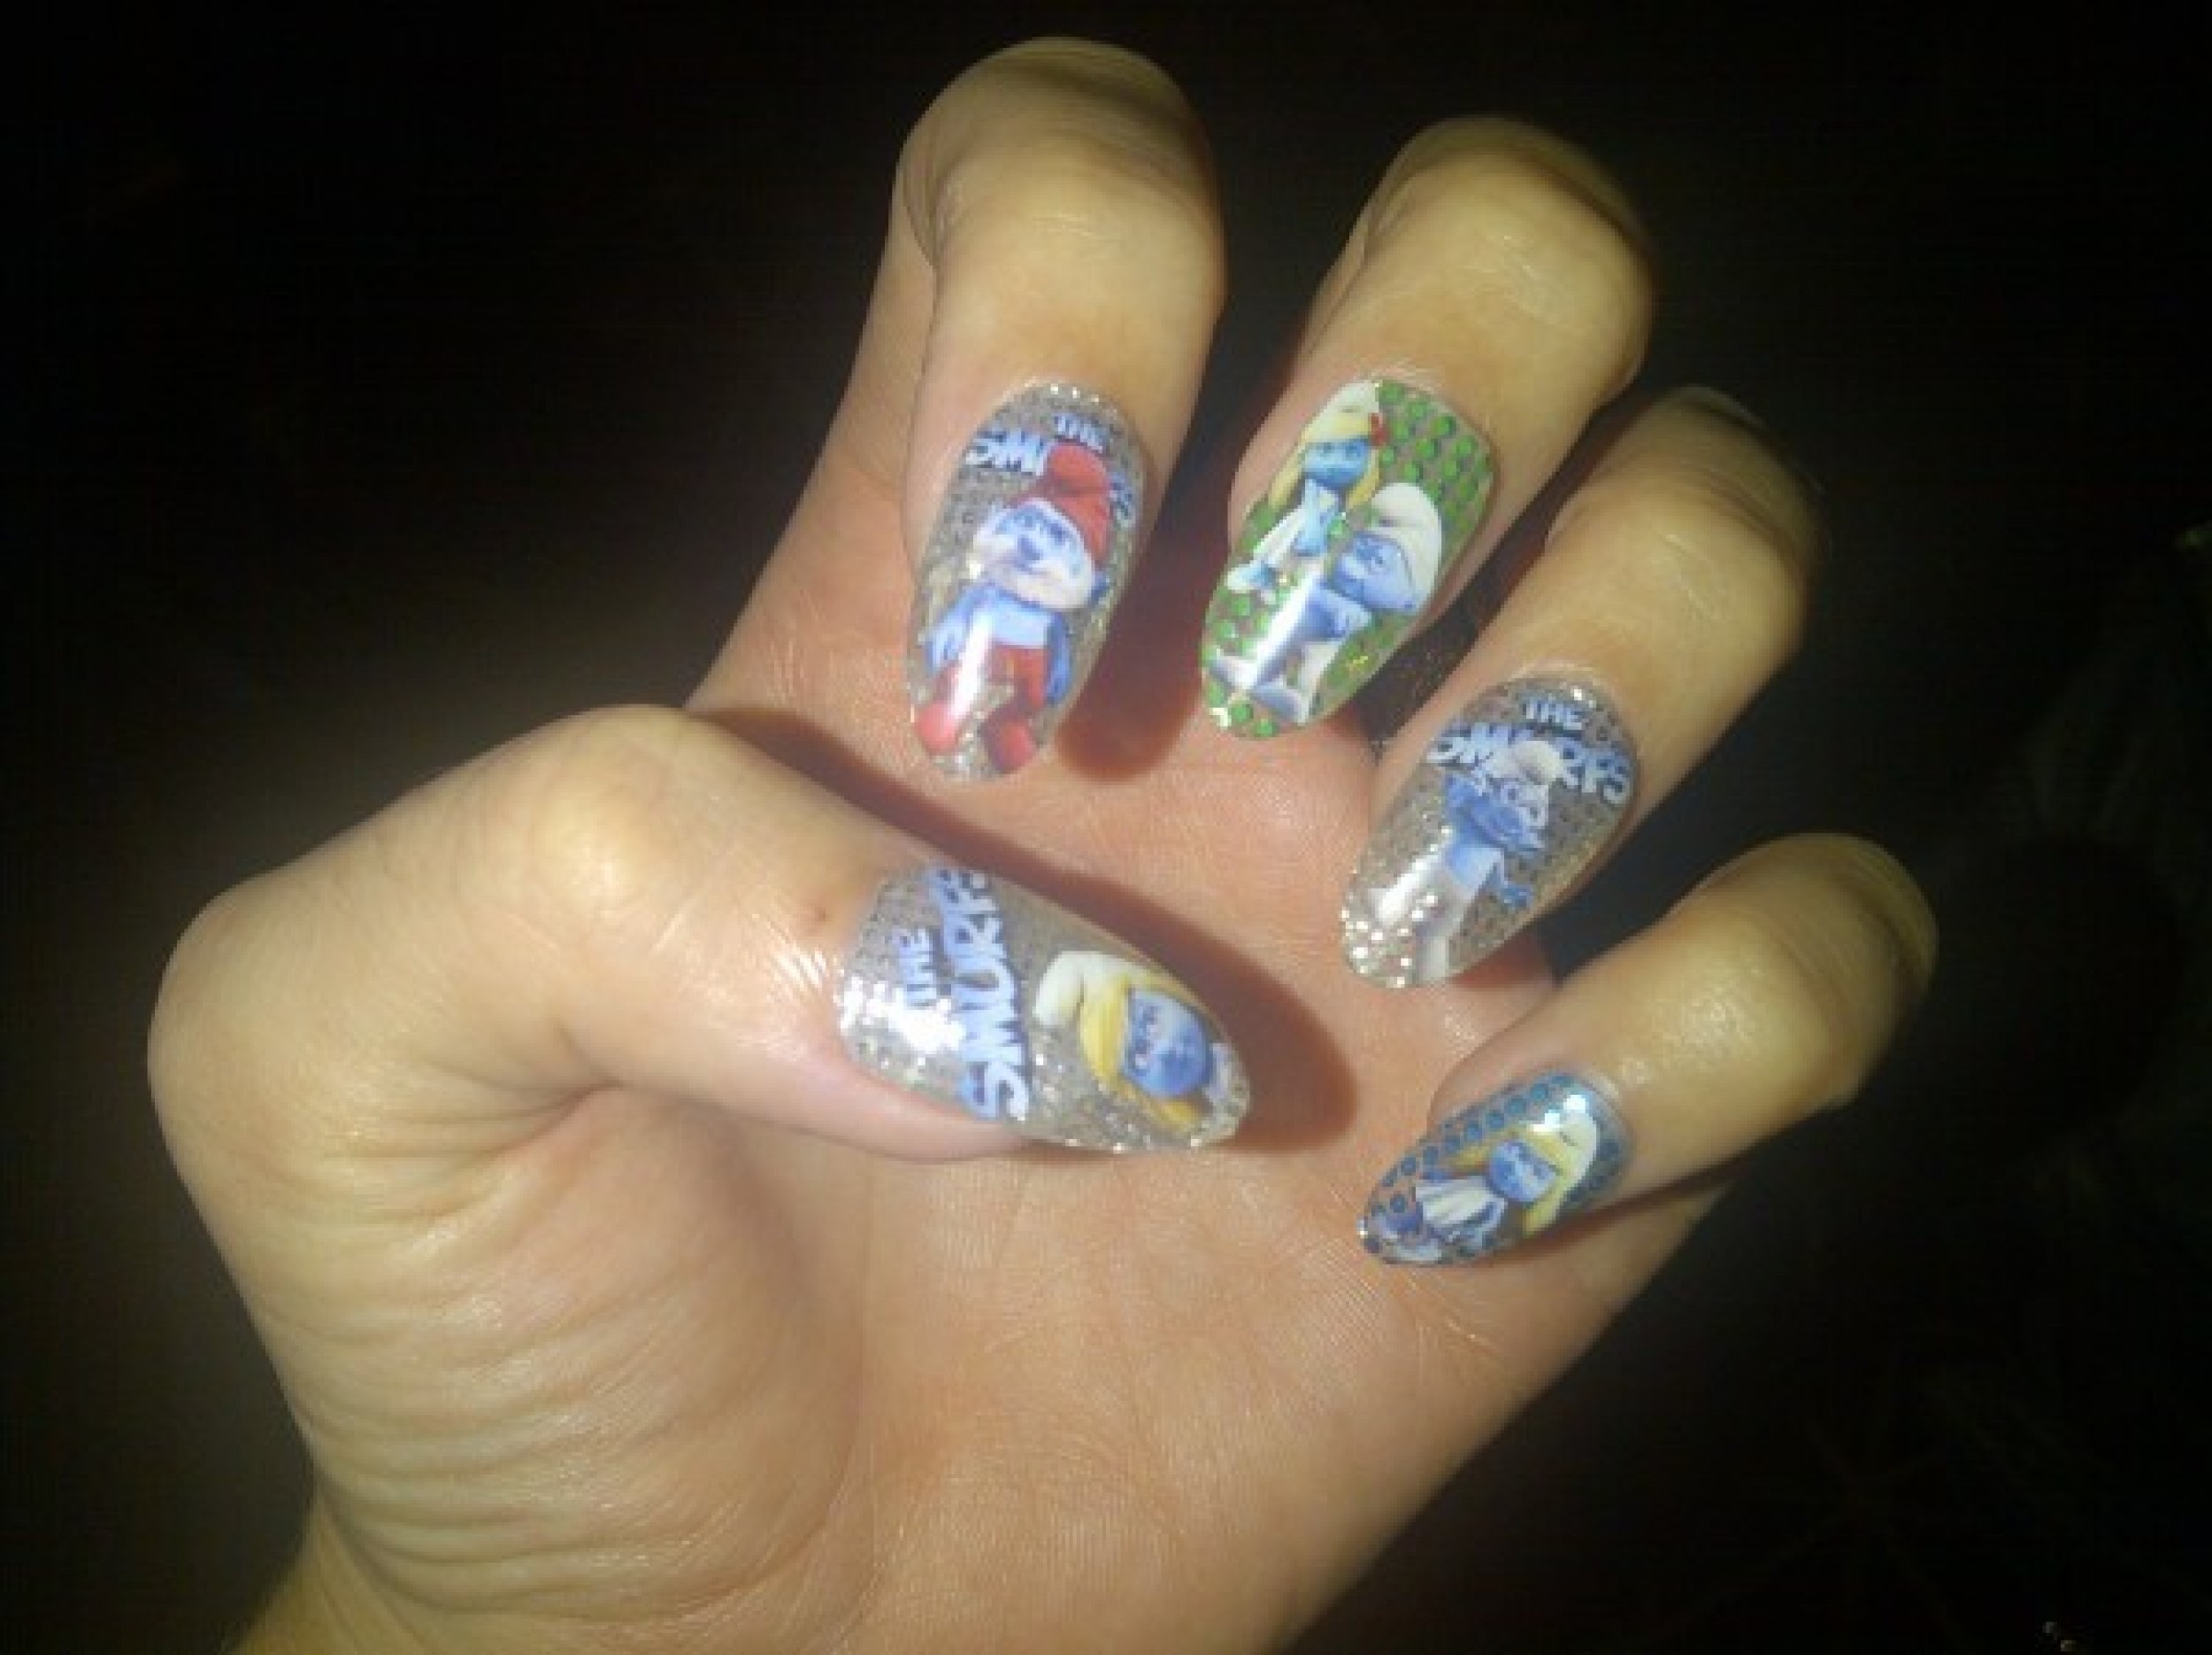 Smurf nails